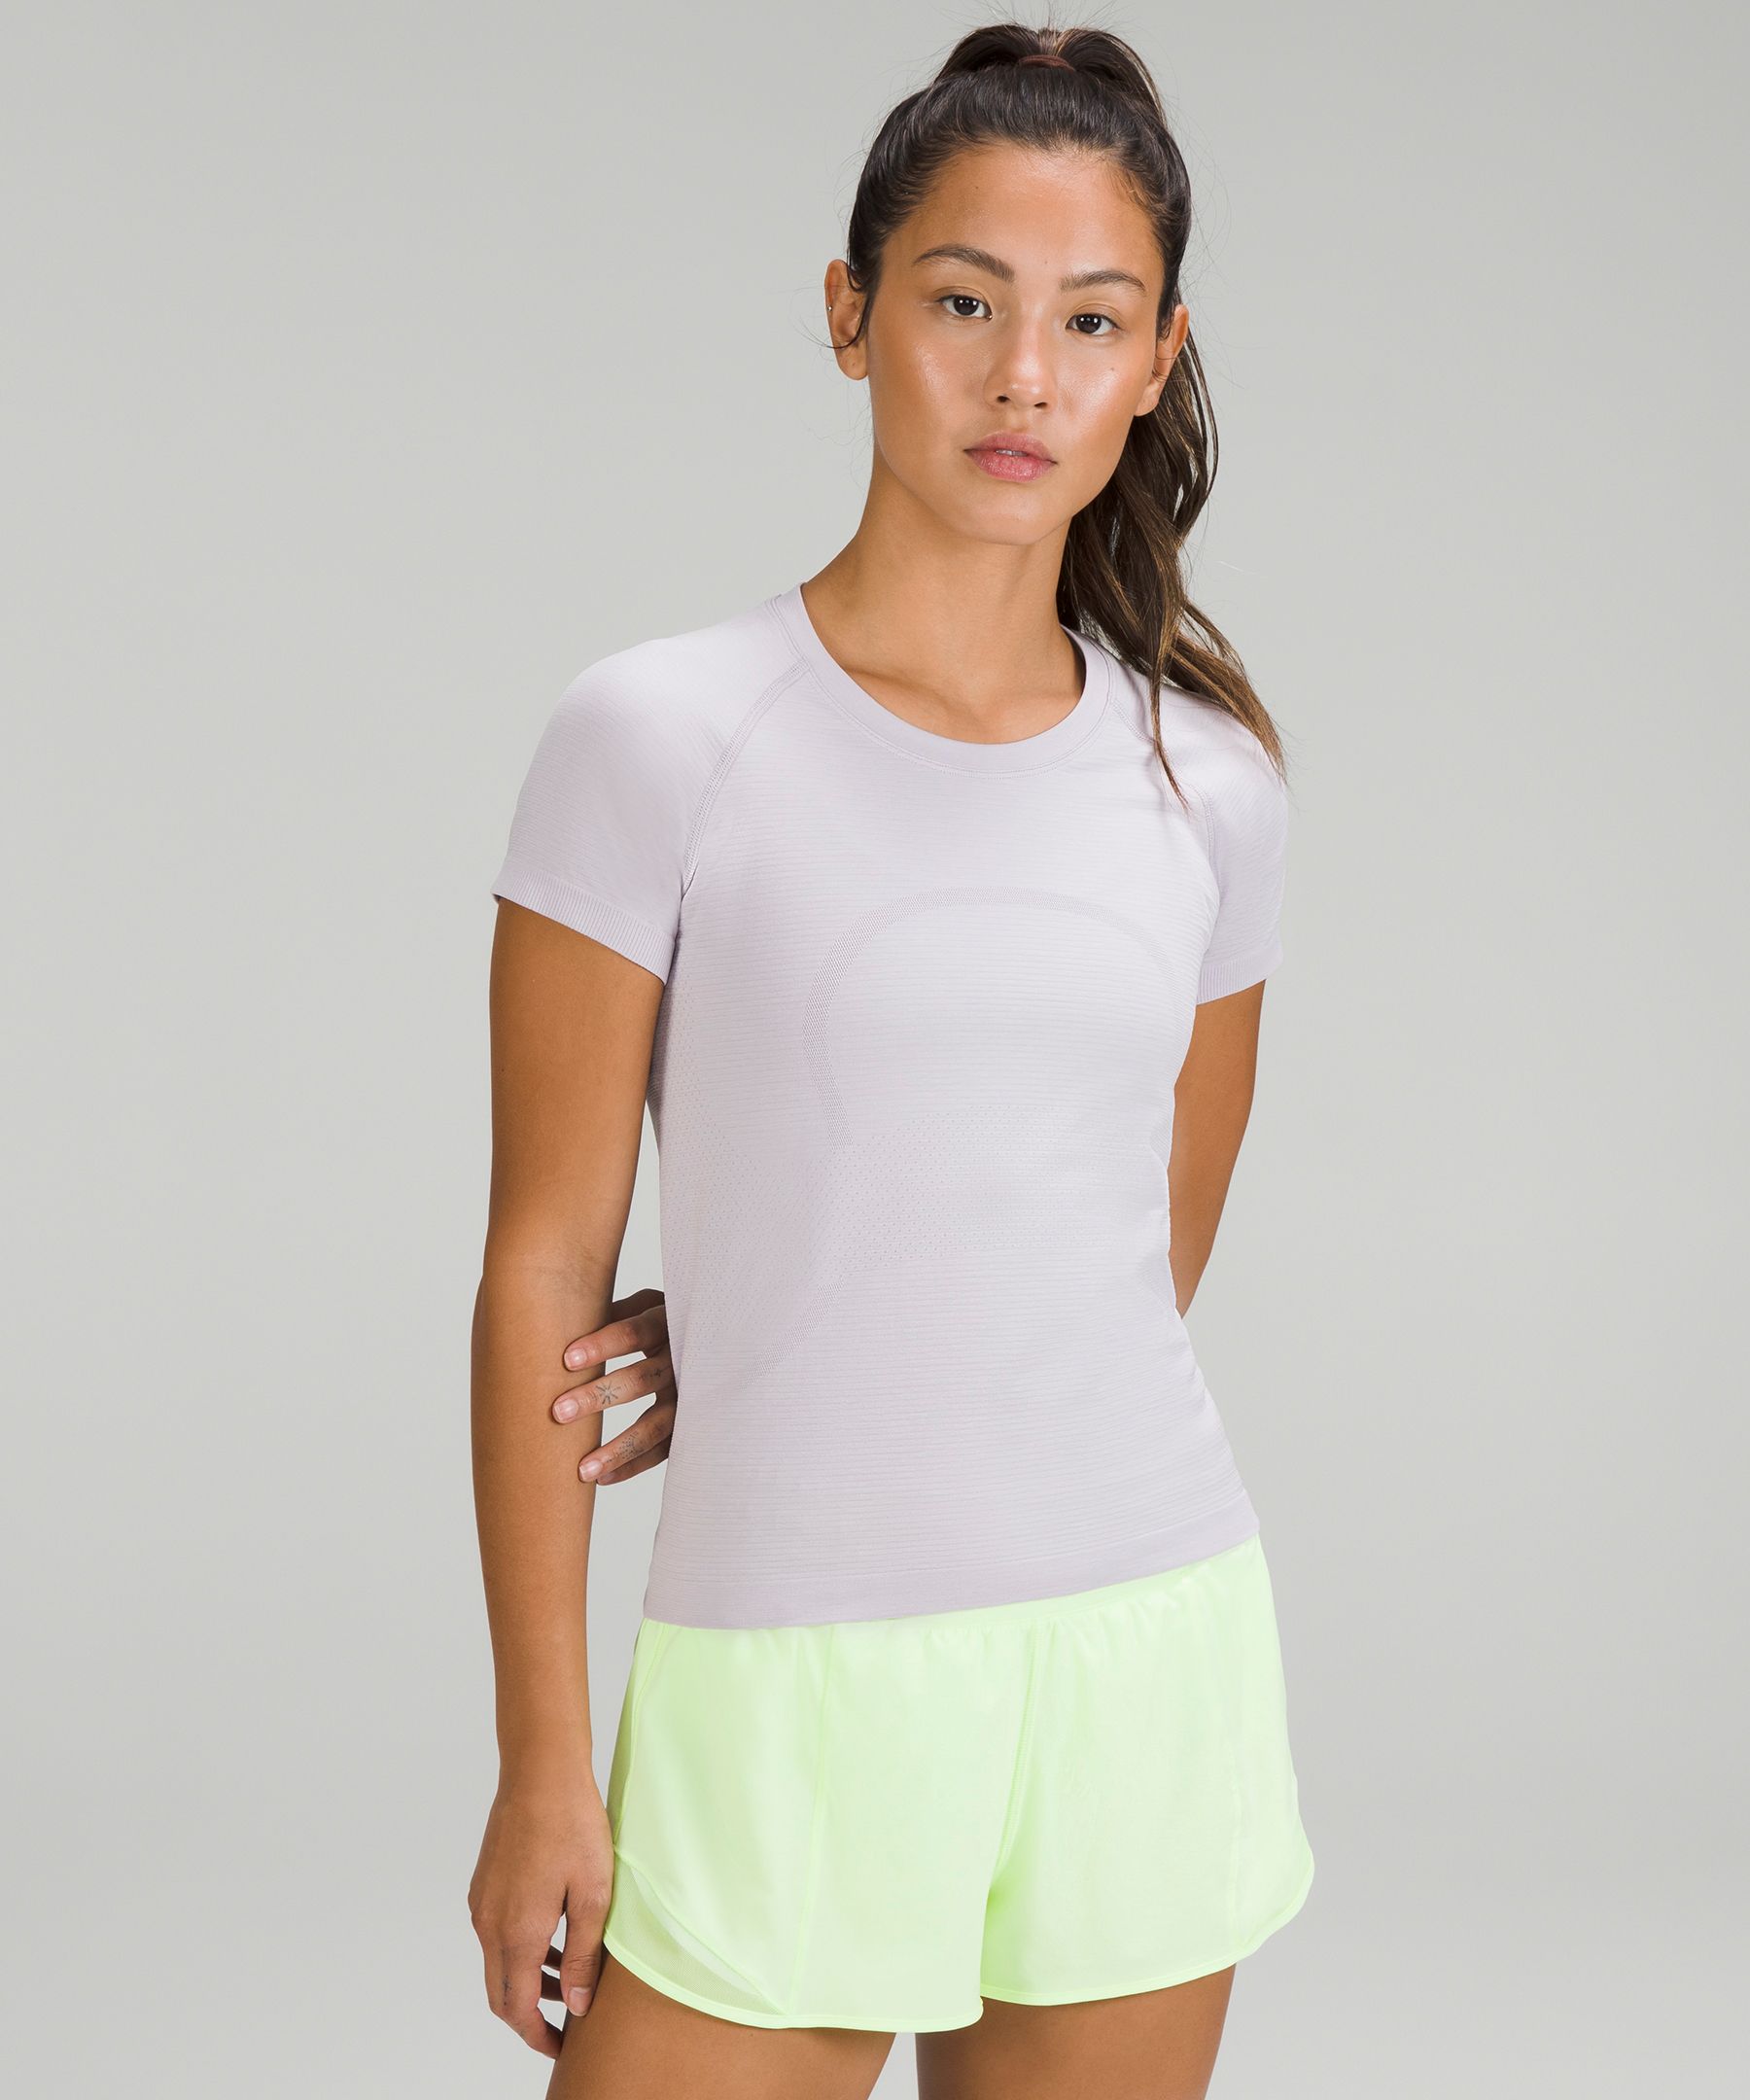 Lululemon Swiftly Tech Short-Sleeve Shirt 2.0 *Race Length - 144100101